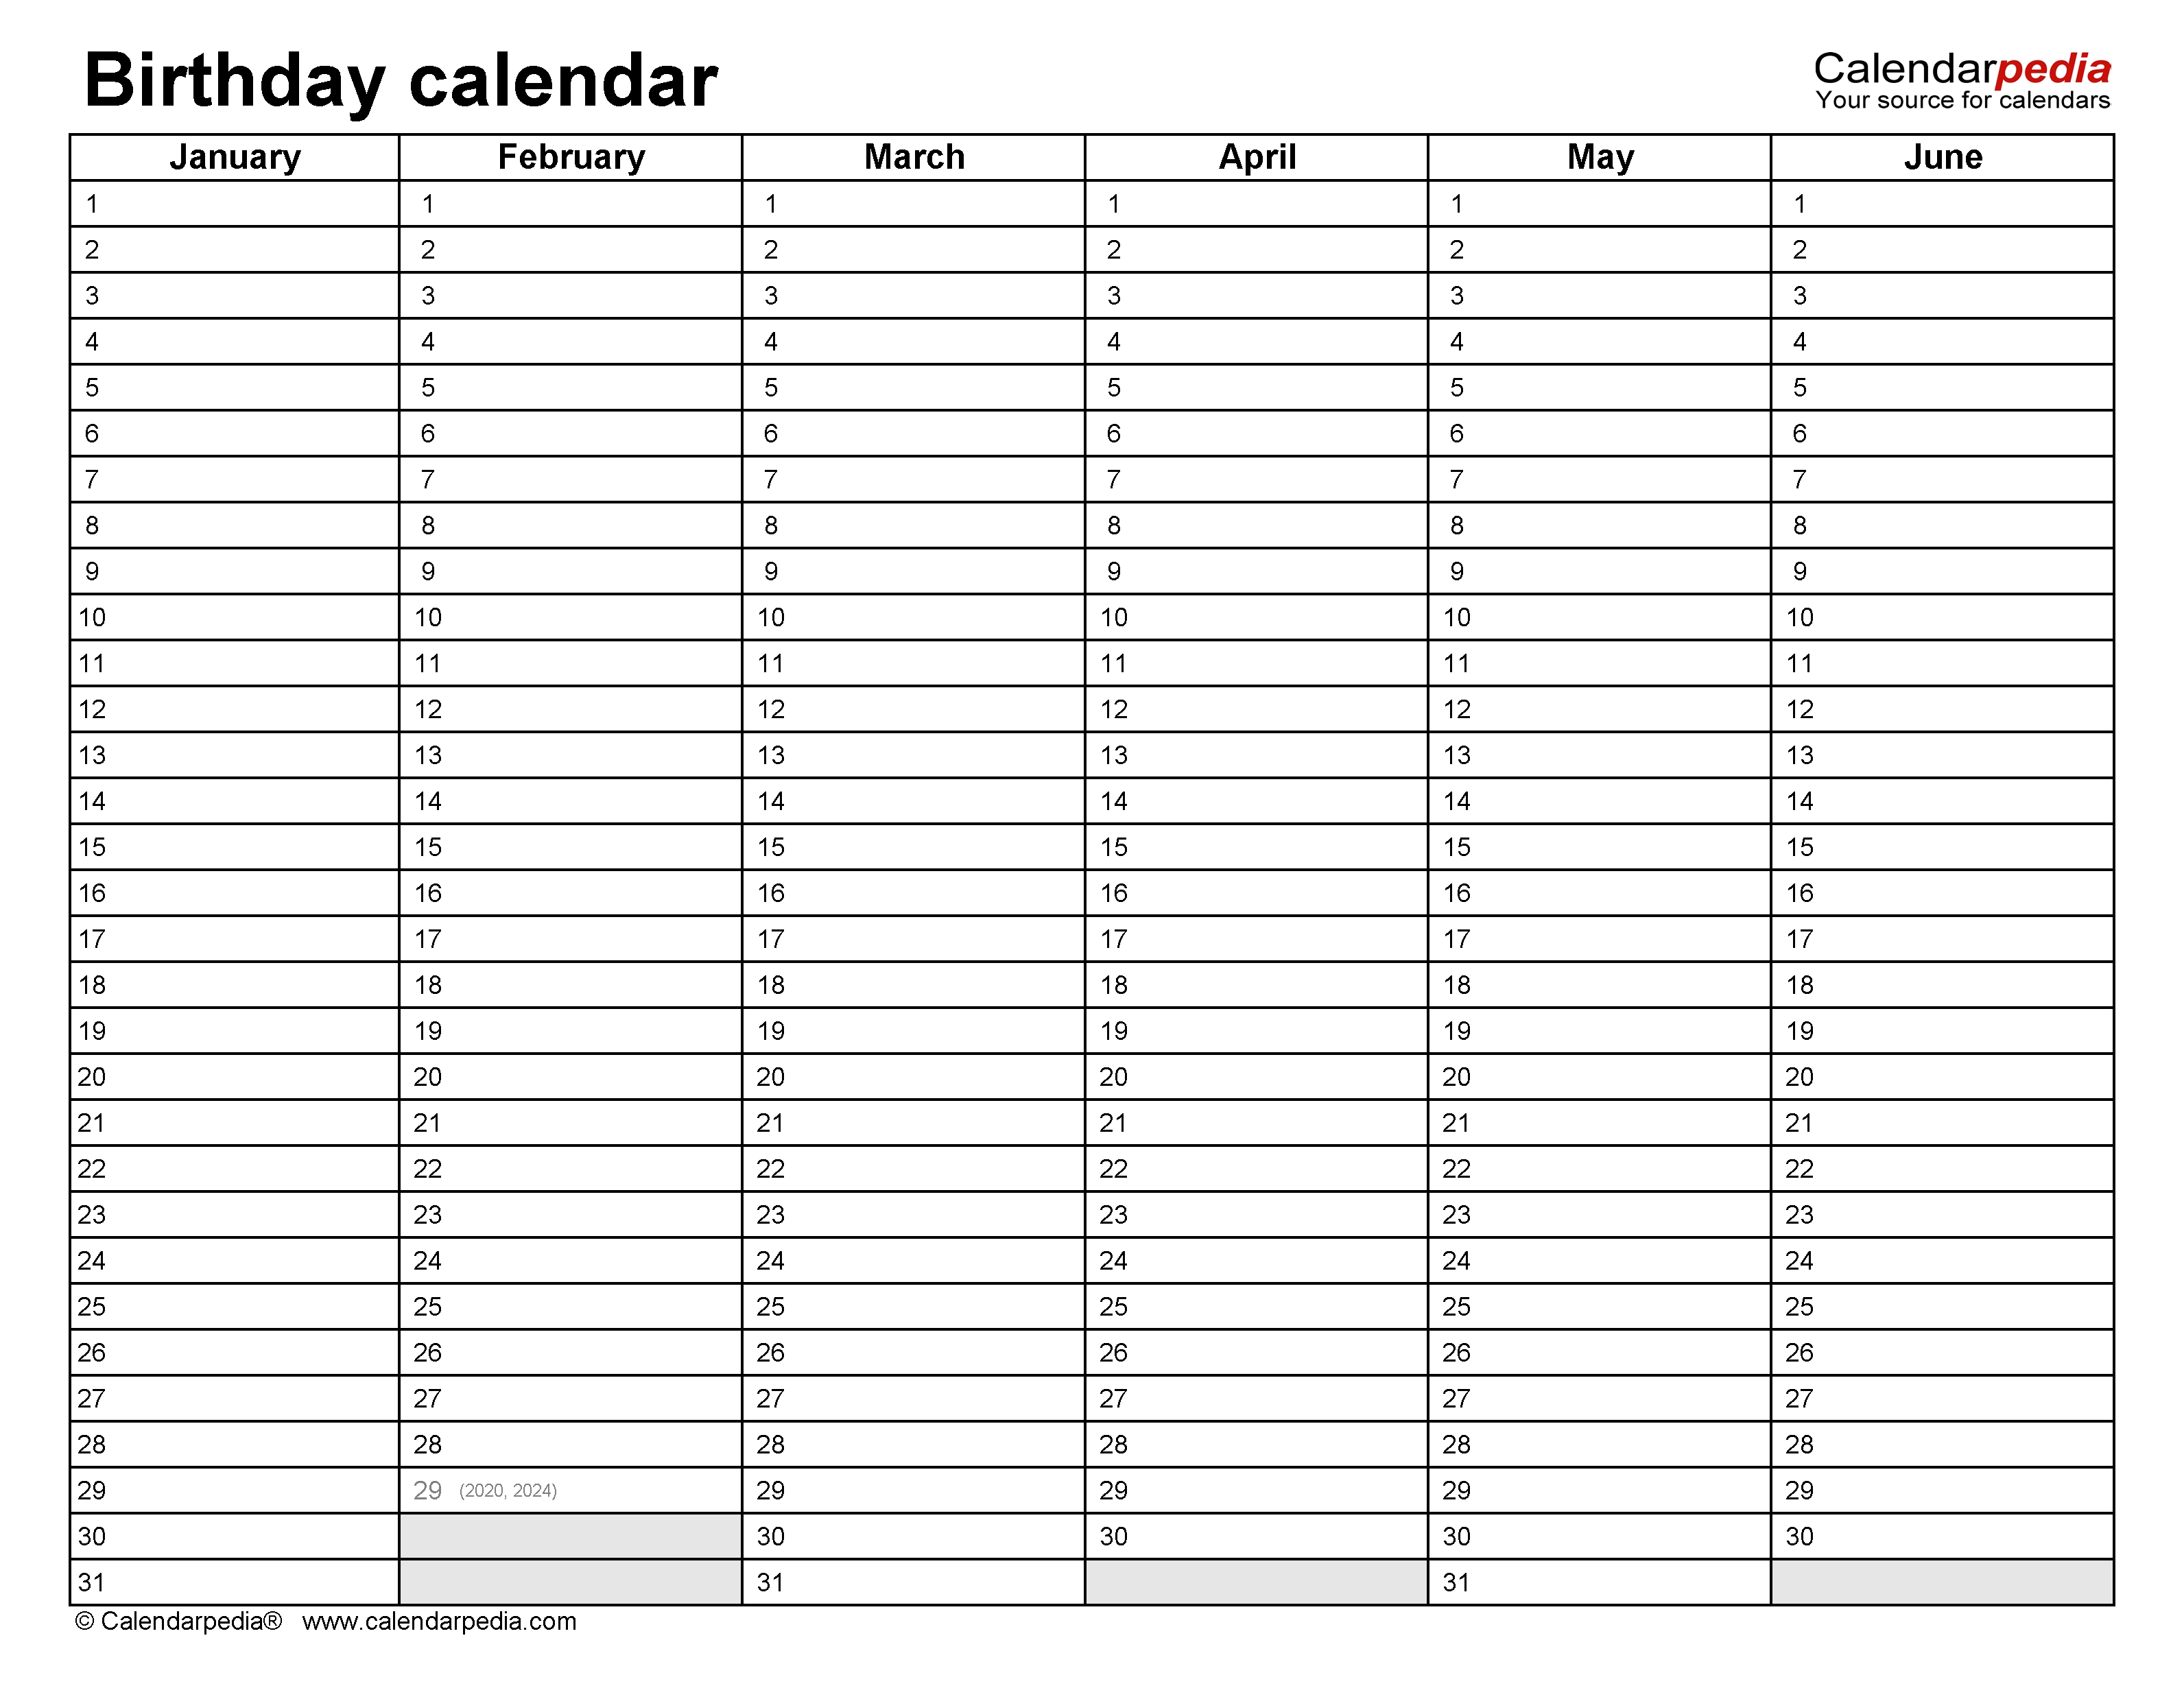 Birthday Calendars - Free Printable Microsoft Word Templates